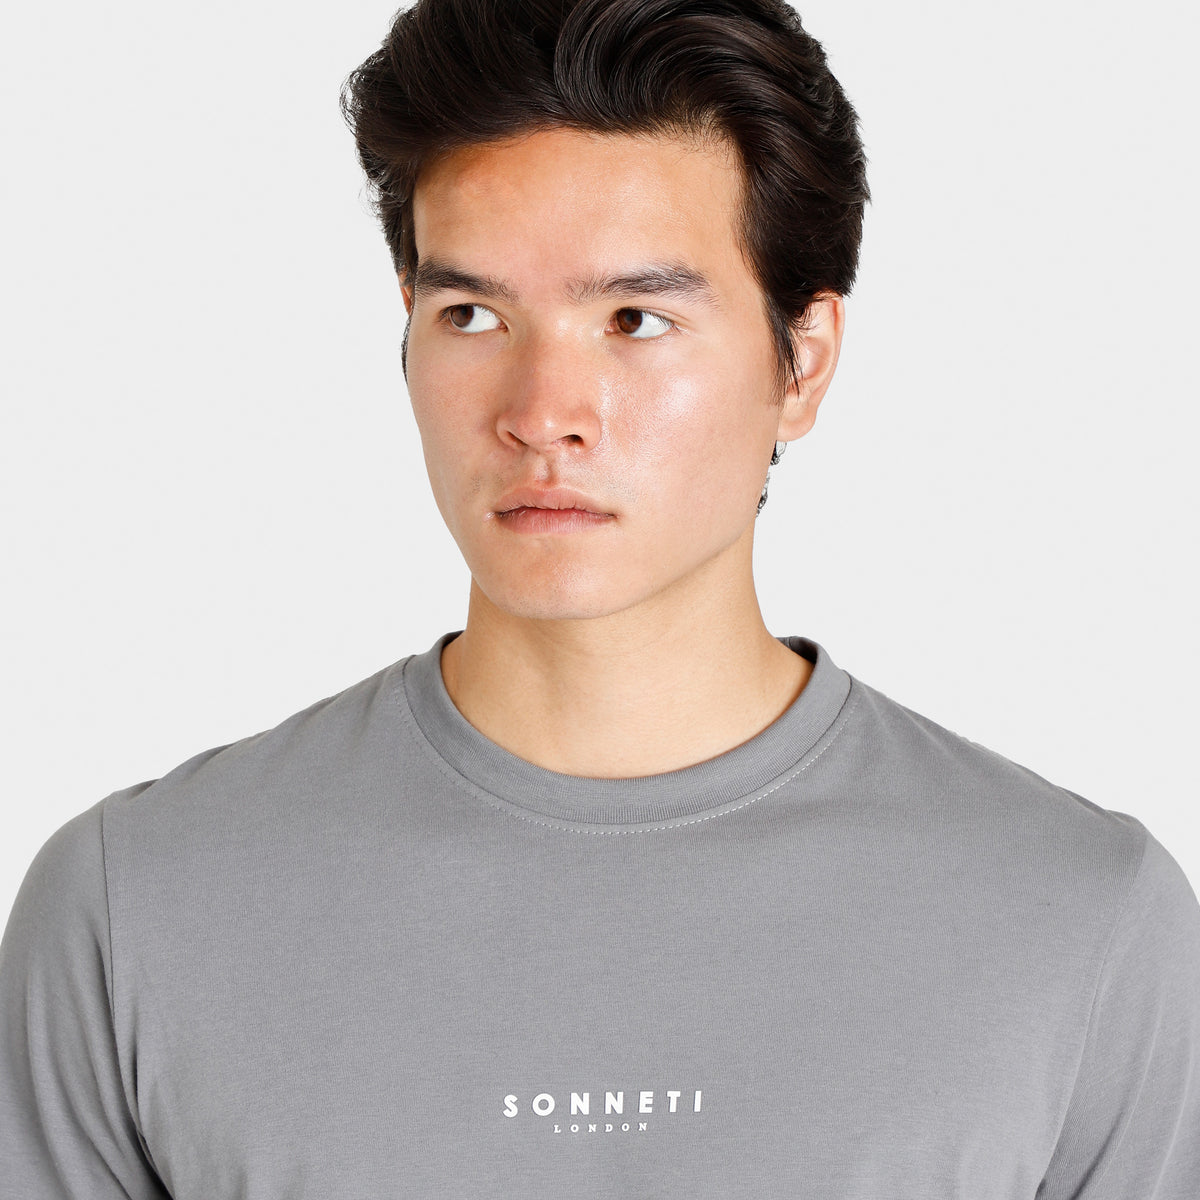 Sonneti London T-shirt / Titanium | JD Sports